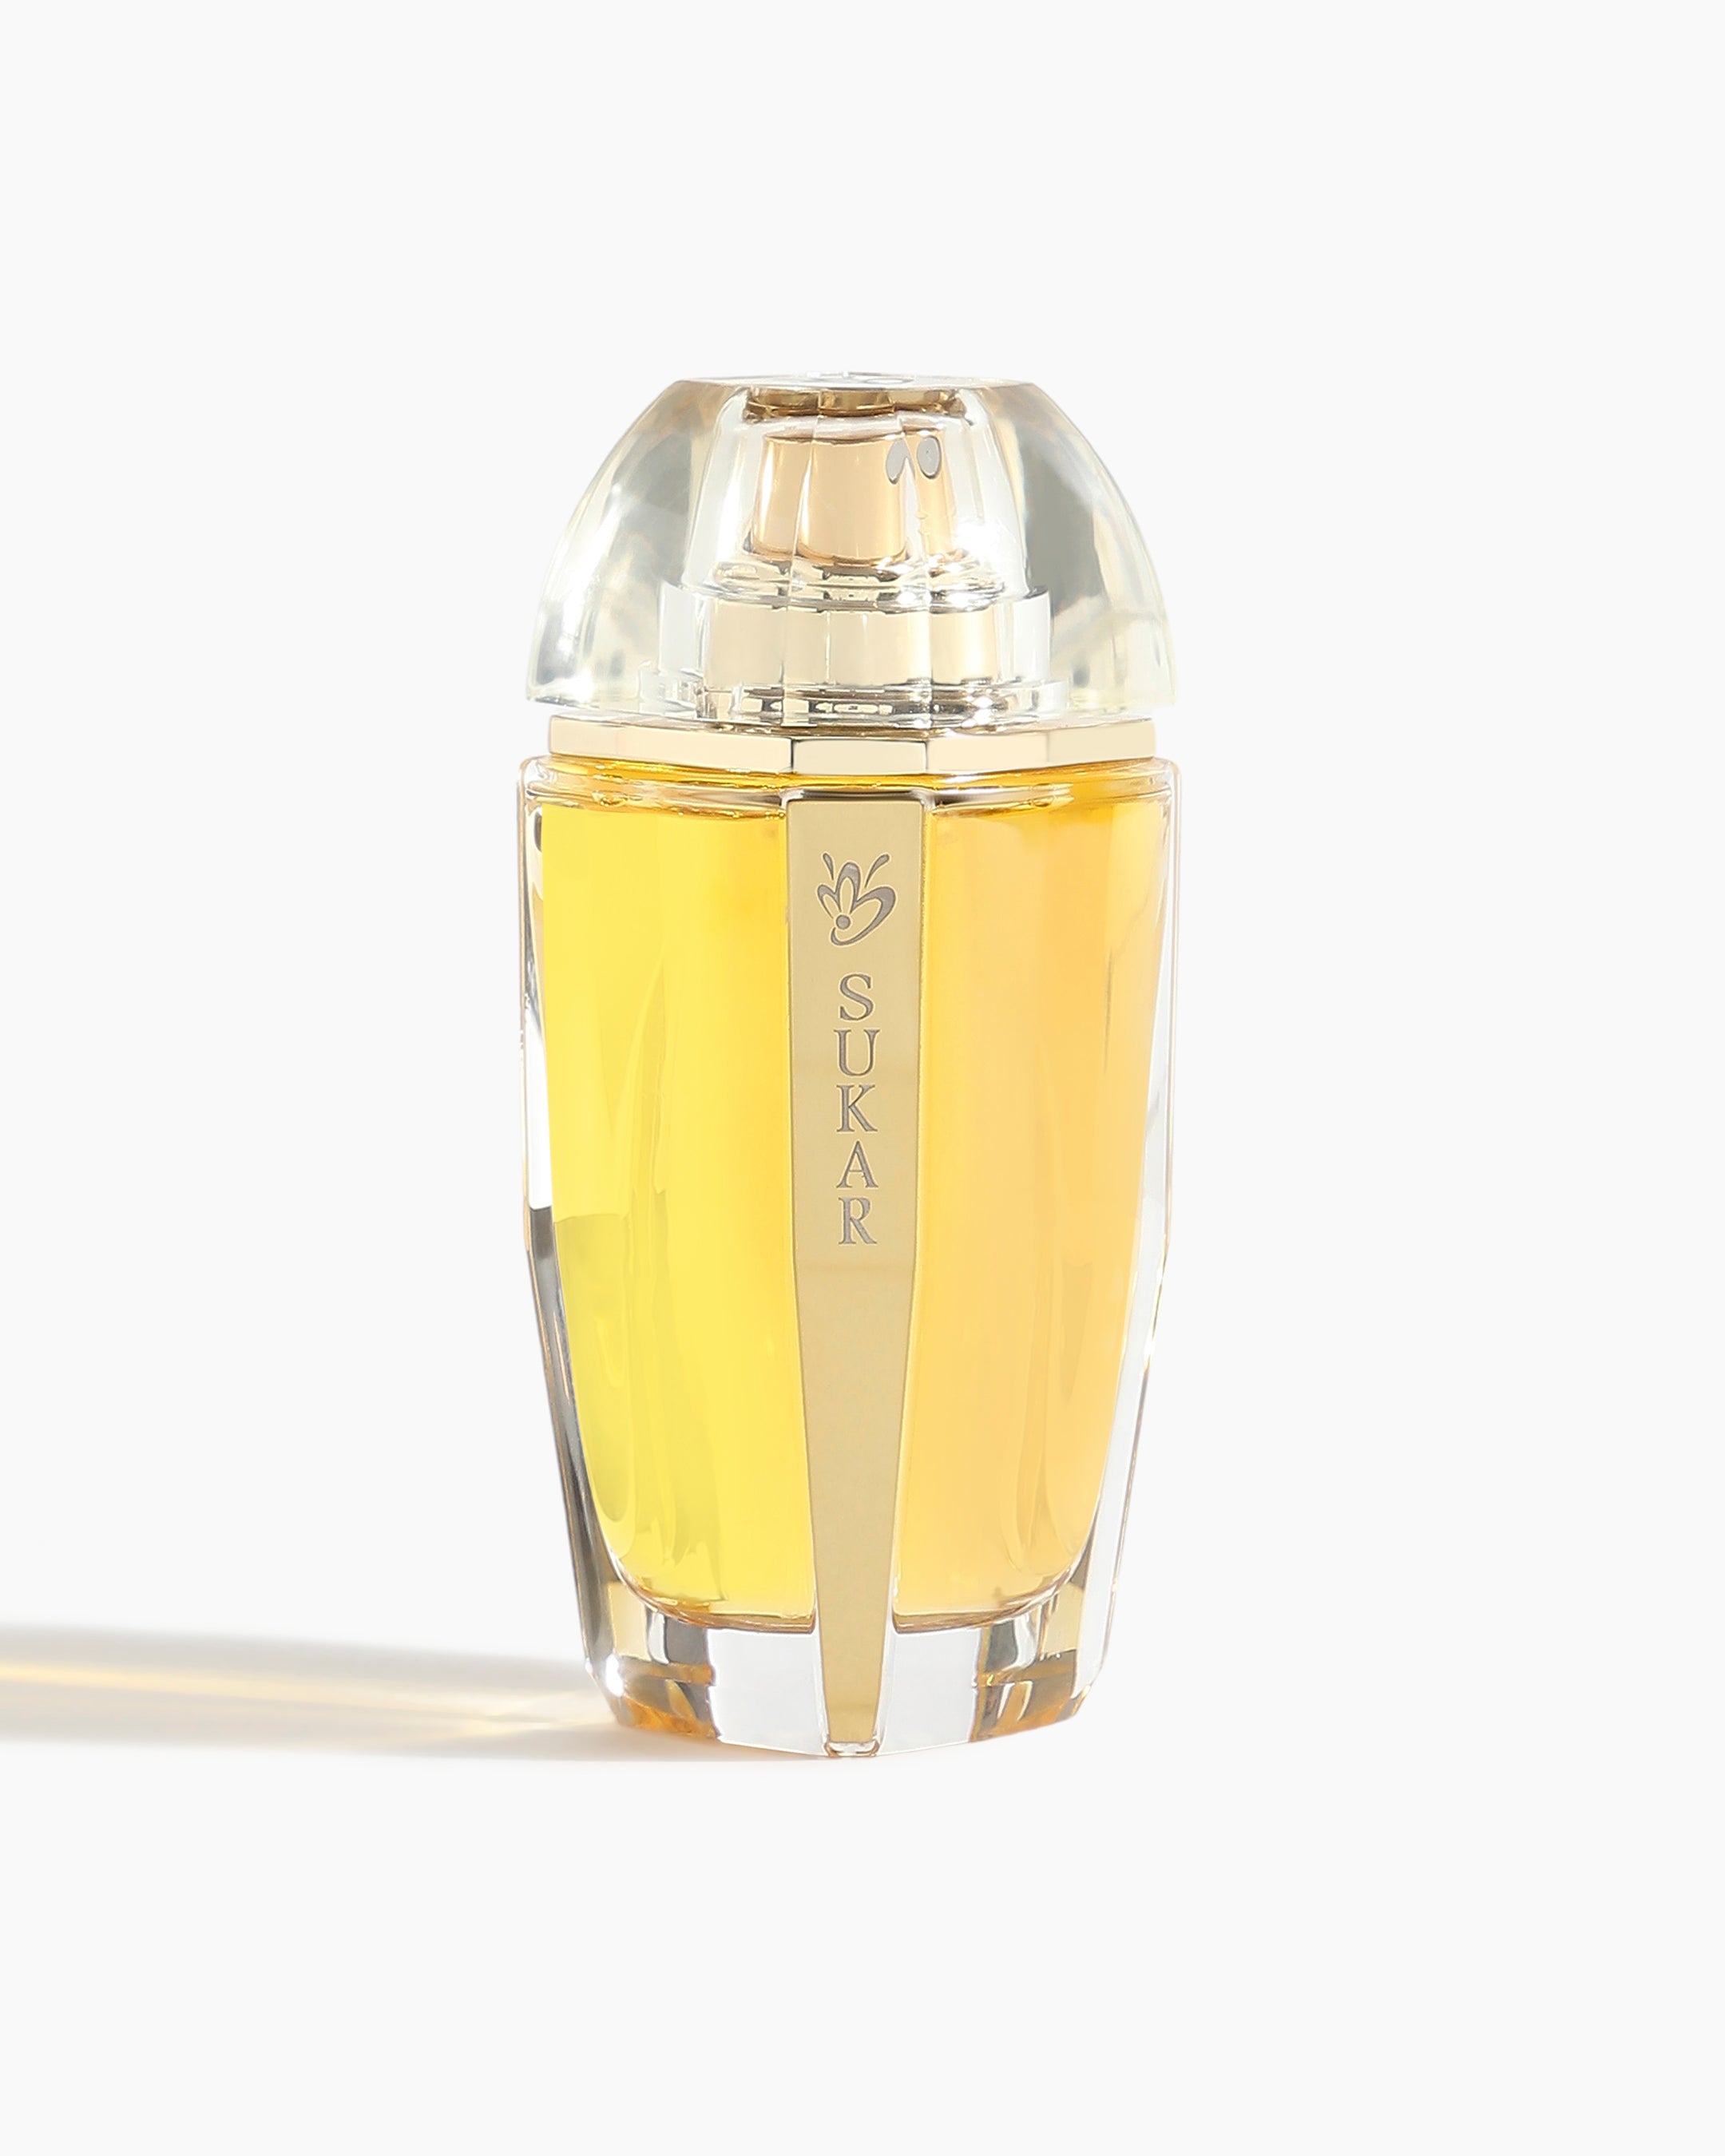 Sukar Parfum (75ml) from Anfasic Dokhoon - MHGboutique